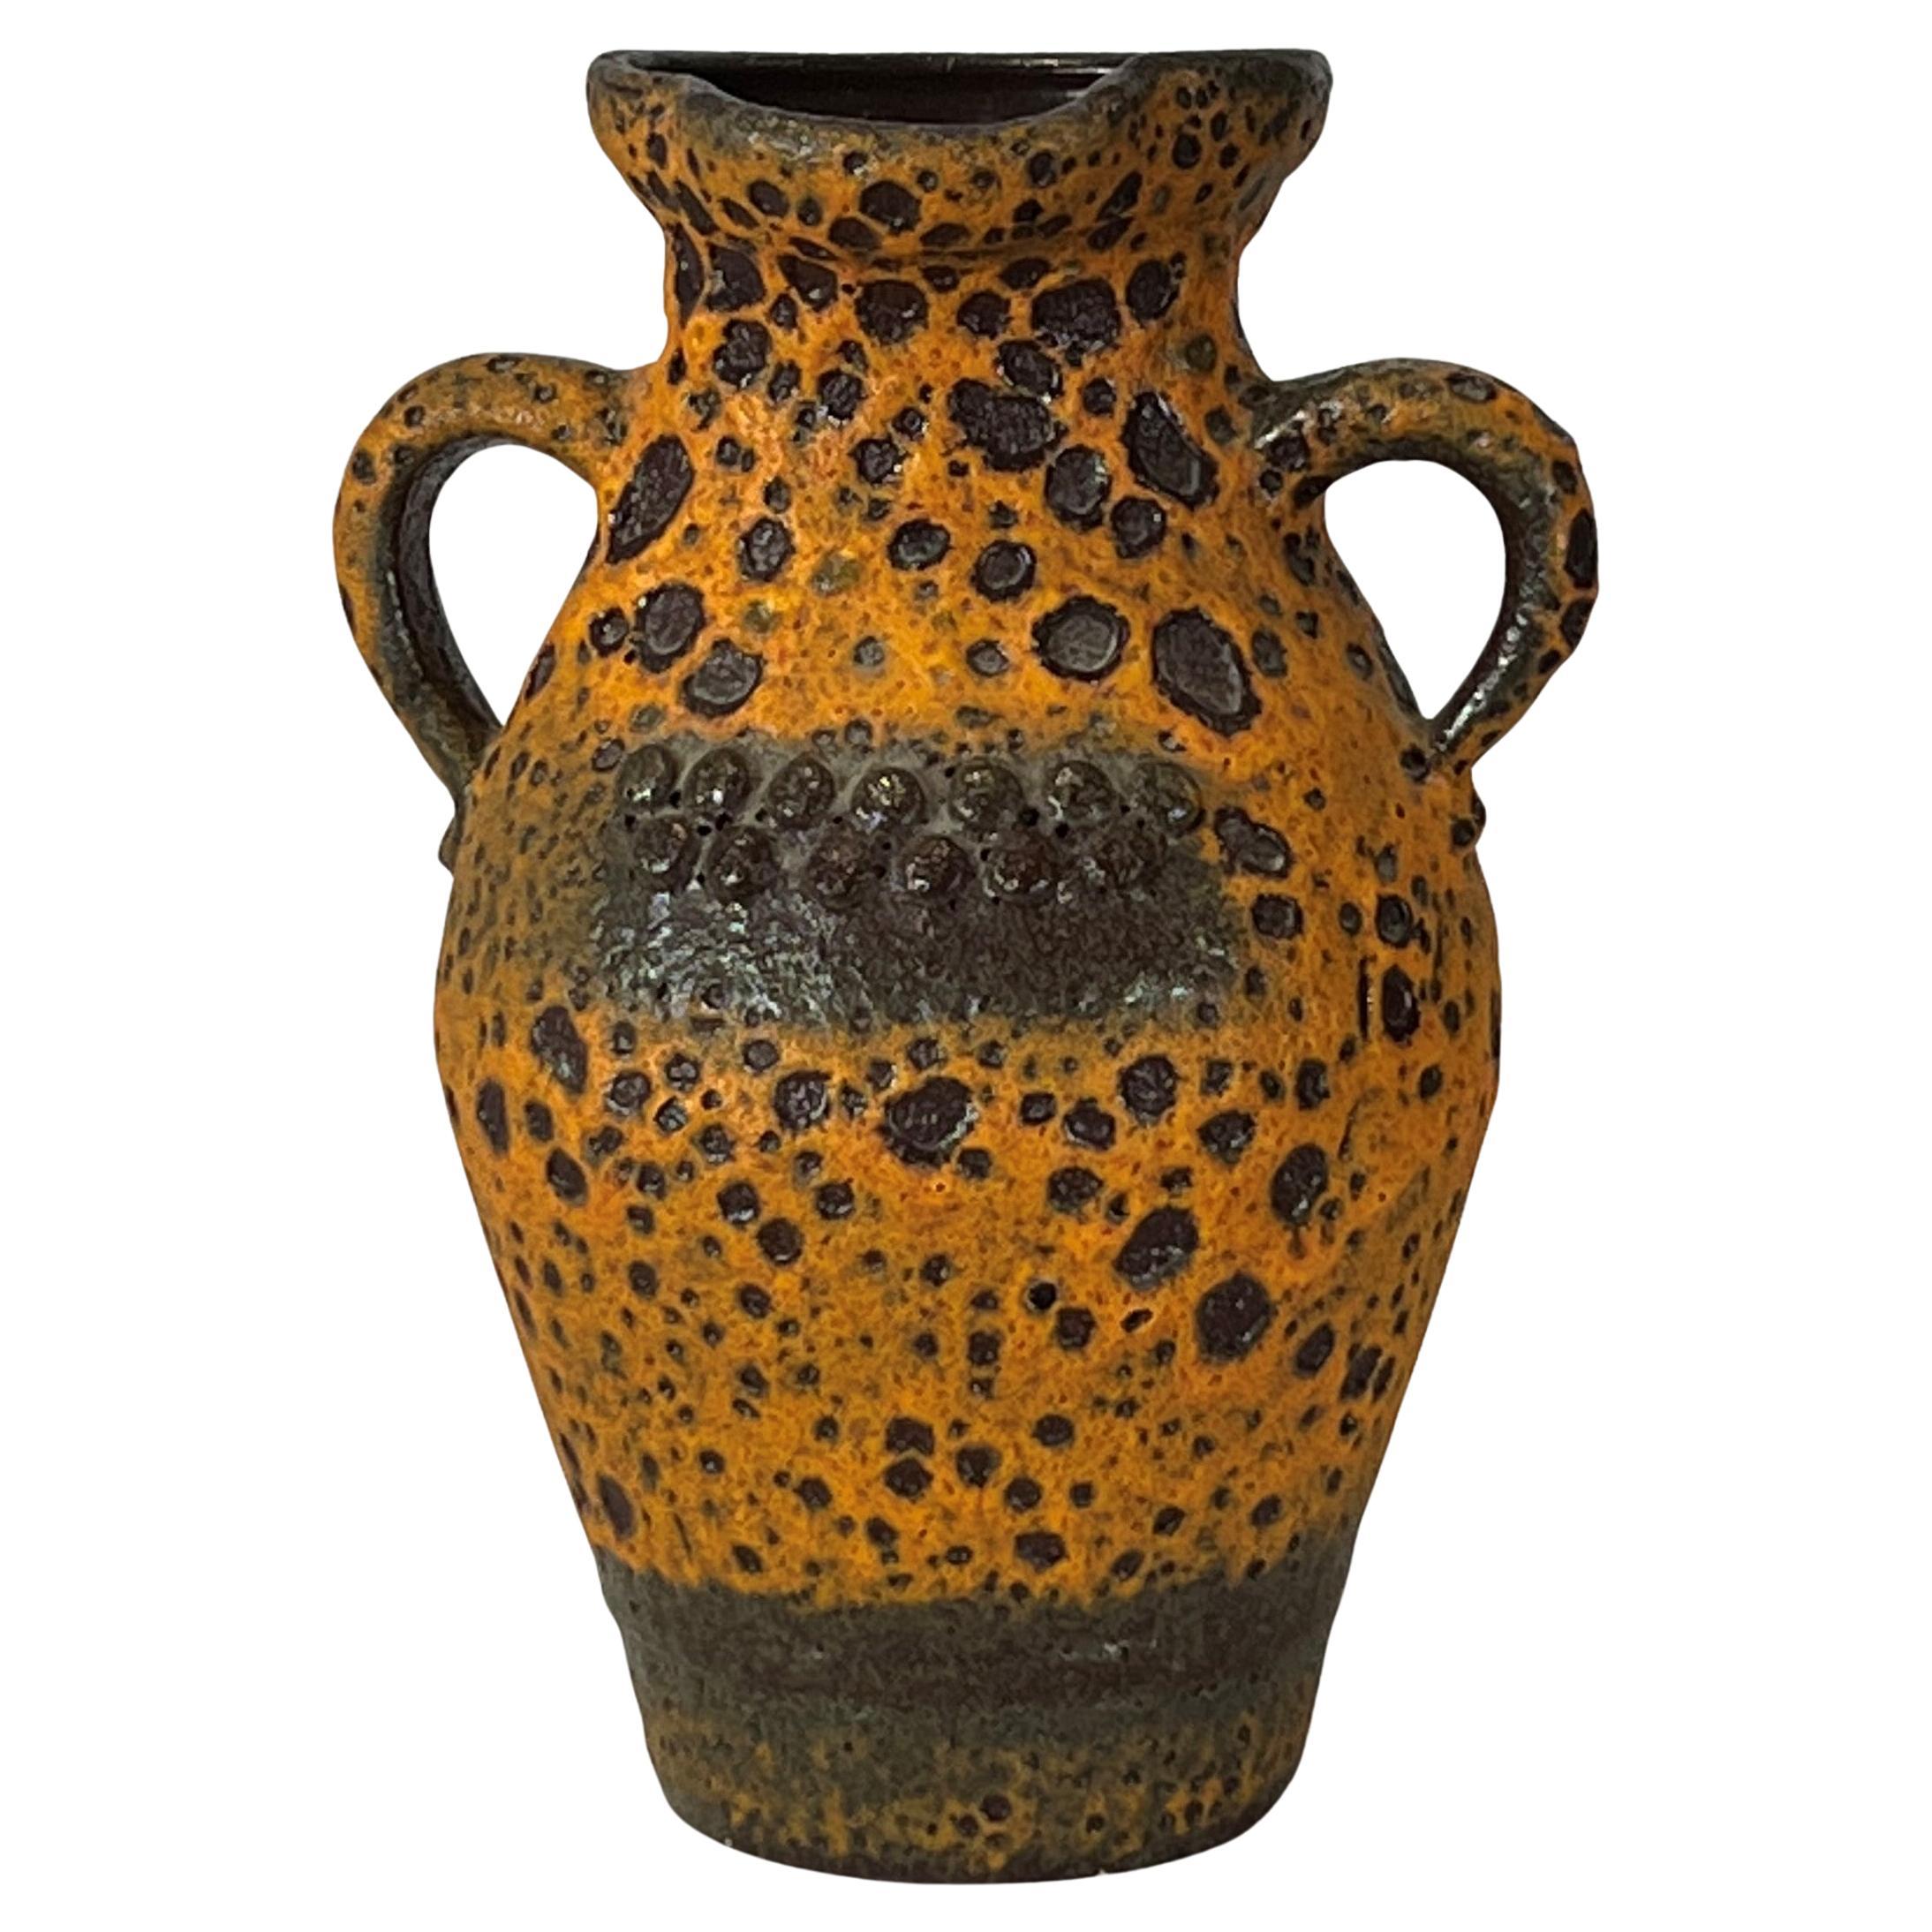 Übelacker Ü-Keramik Robot vase rare form 1838/25 Orange Brown " Rosey "